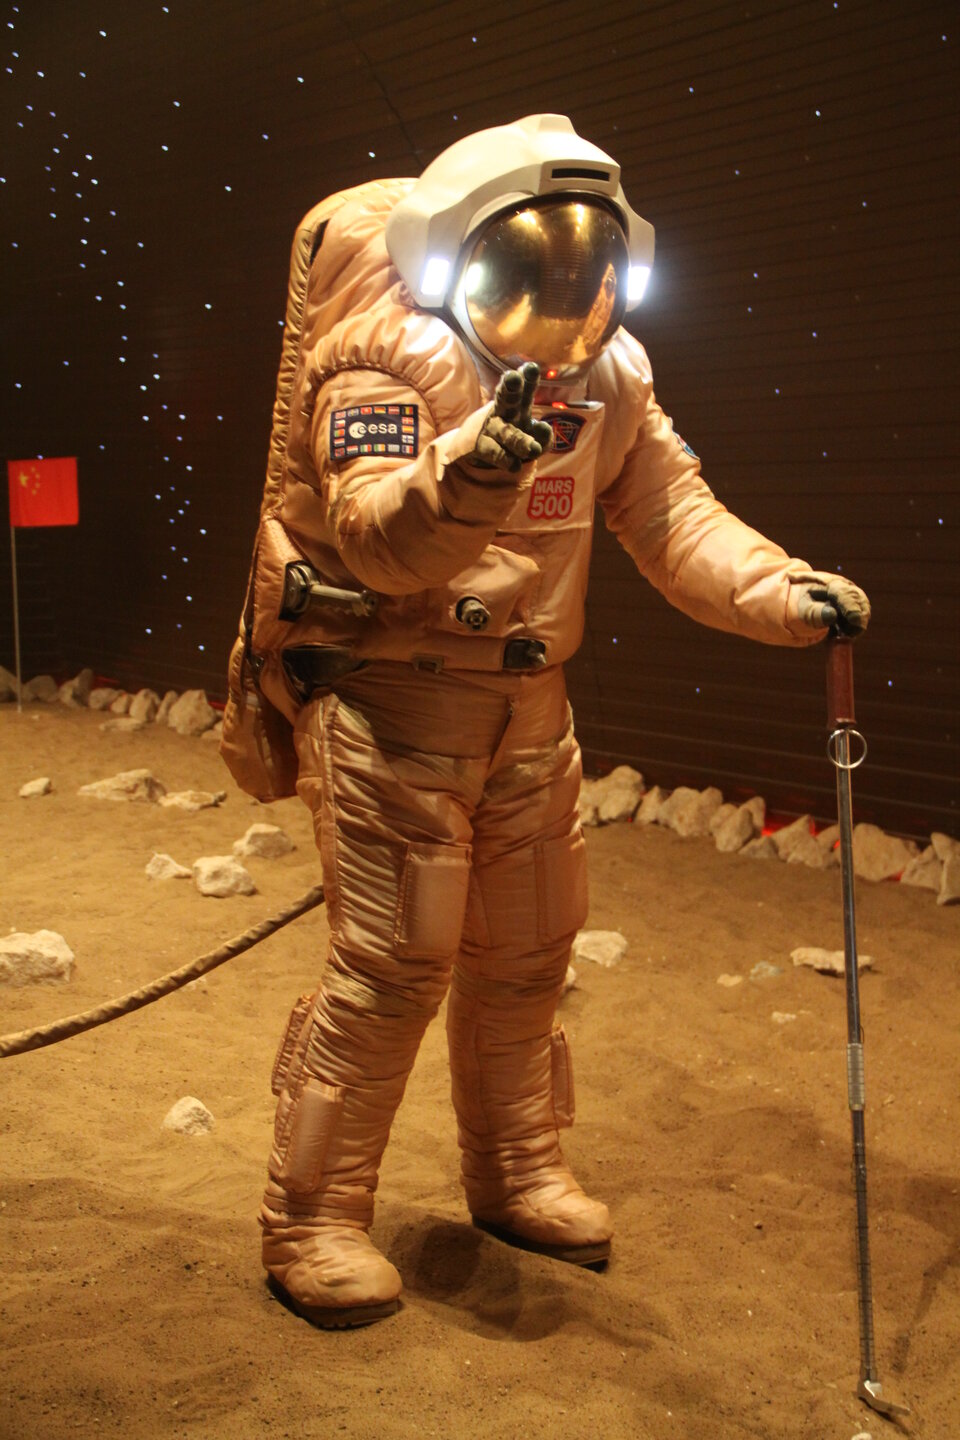 Diego walking on 'Mars'